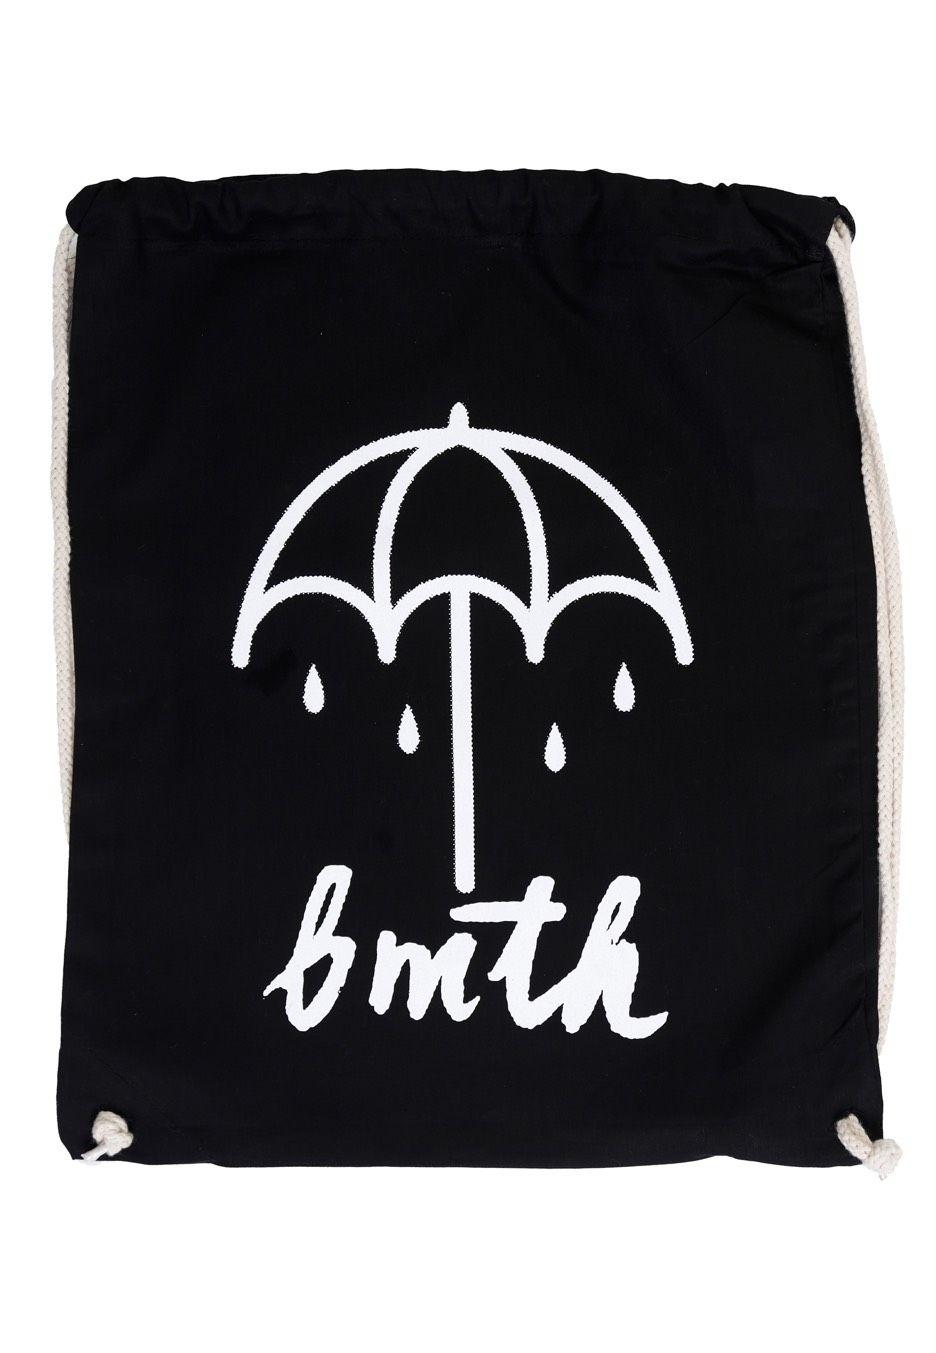 Bring Me the Horizon Logo - Bring Me The Horizon - Umbrella Script Drawstring - Backpack